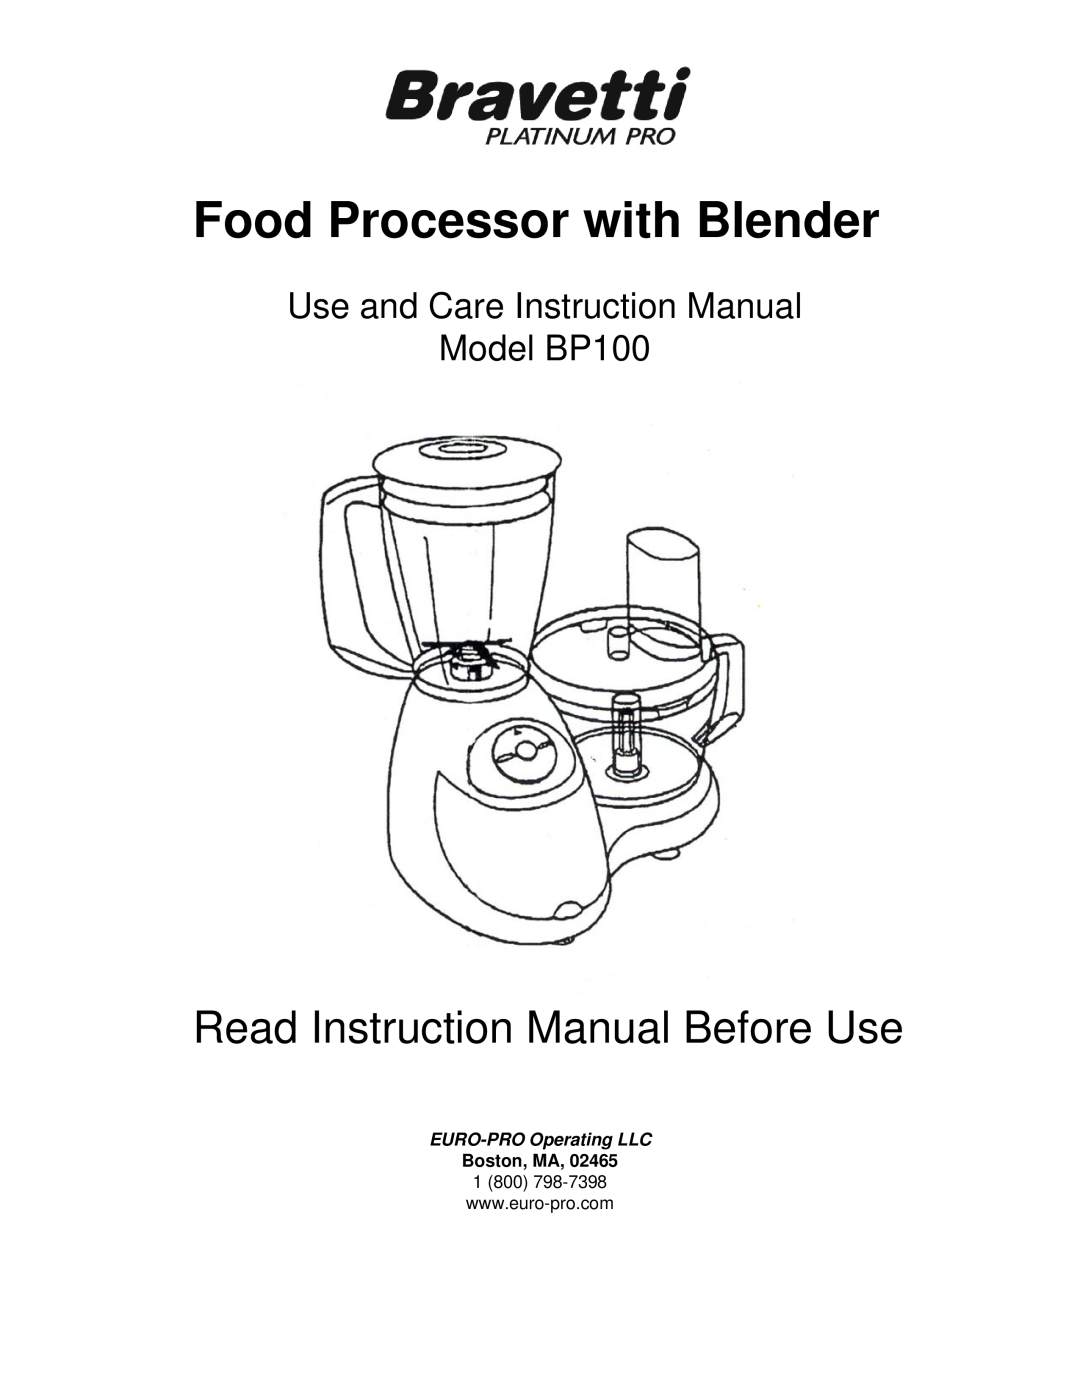 Bravetti BP100 instruction manual Food Processor with Blender, EURO-PROOperating LLC, Boston, MA 